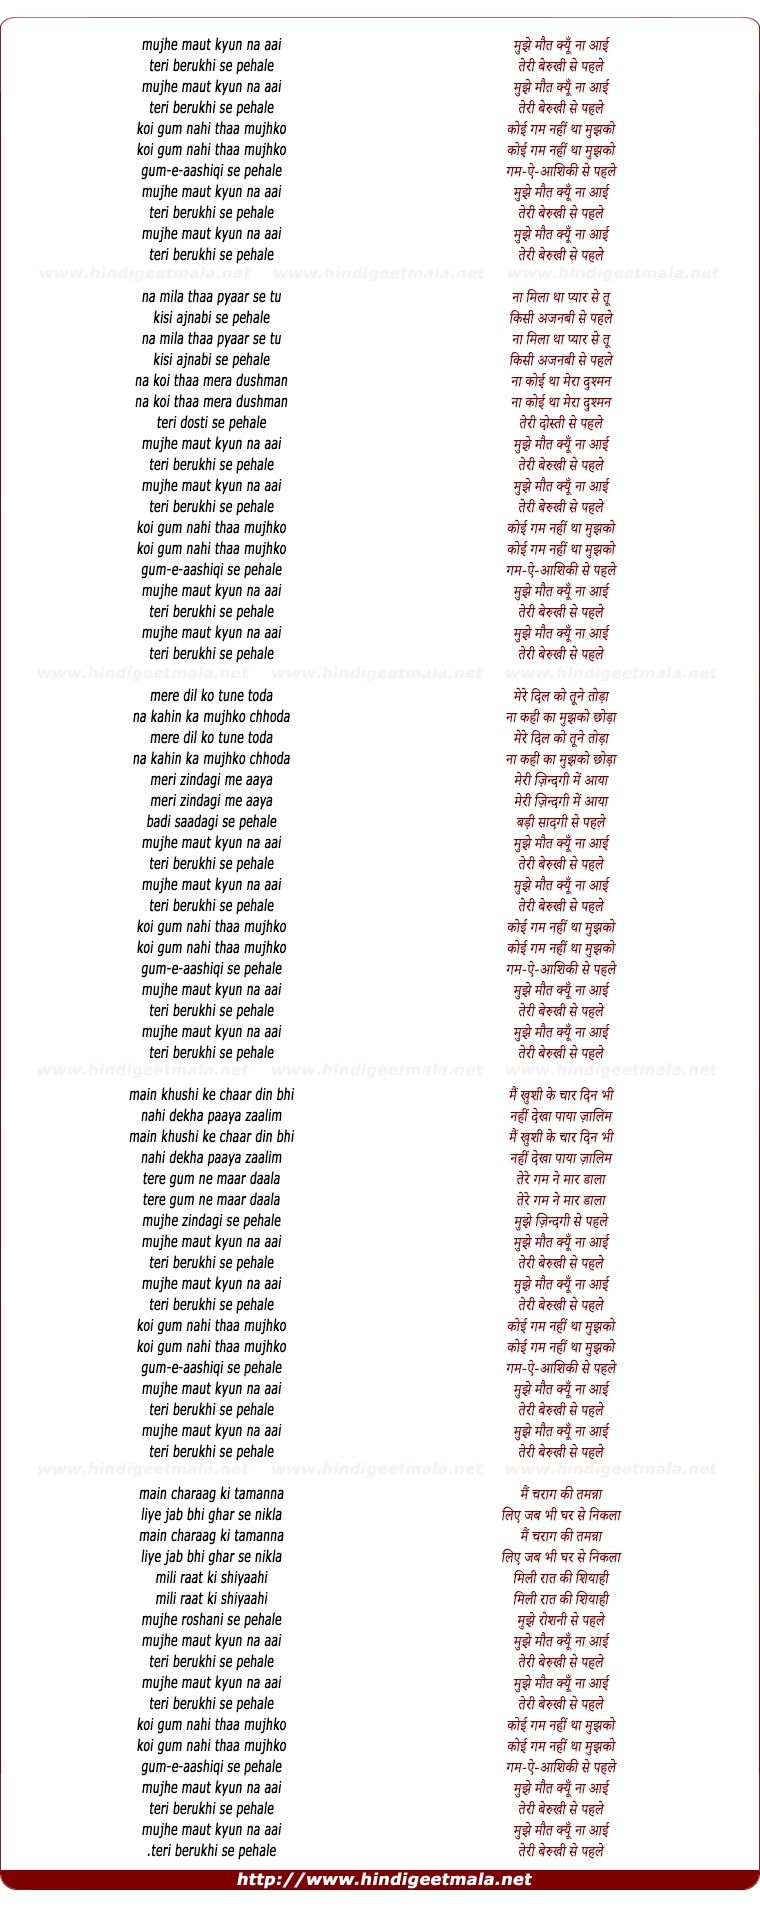 lyrics of song Mujhe Maut Kyun Naa Aayi